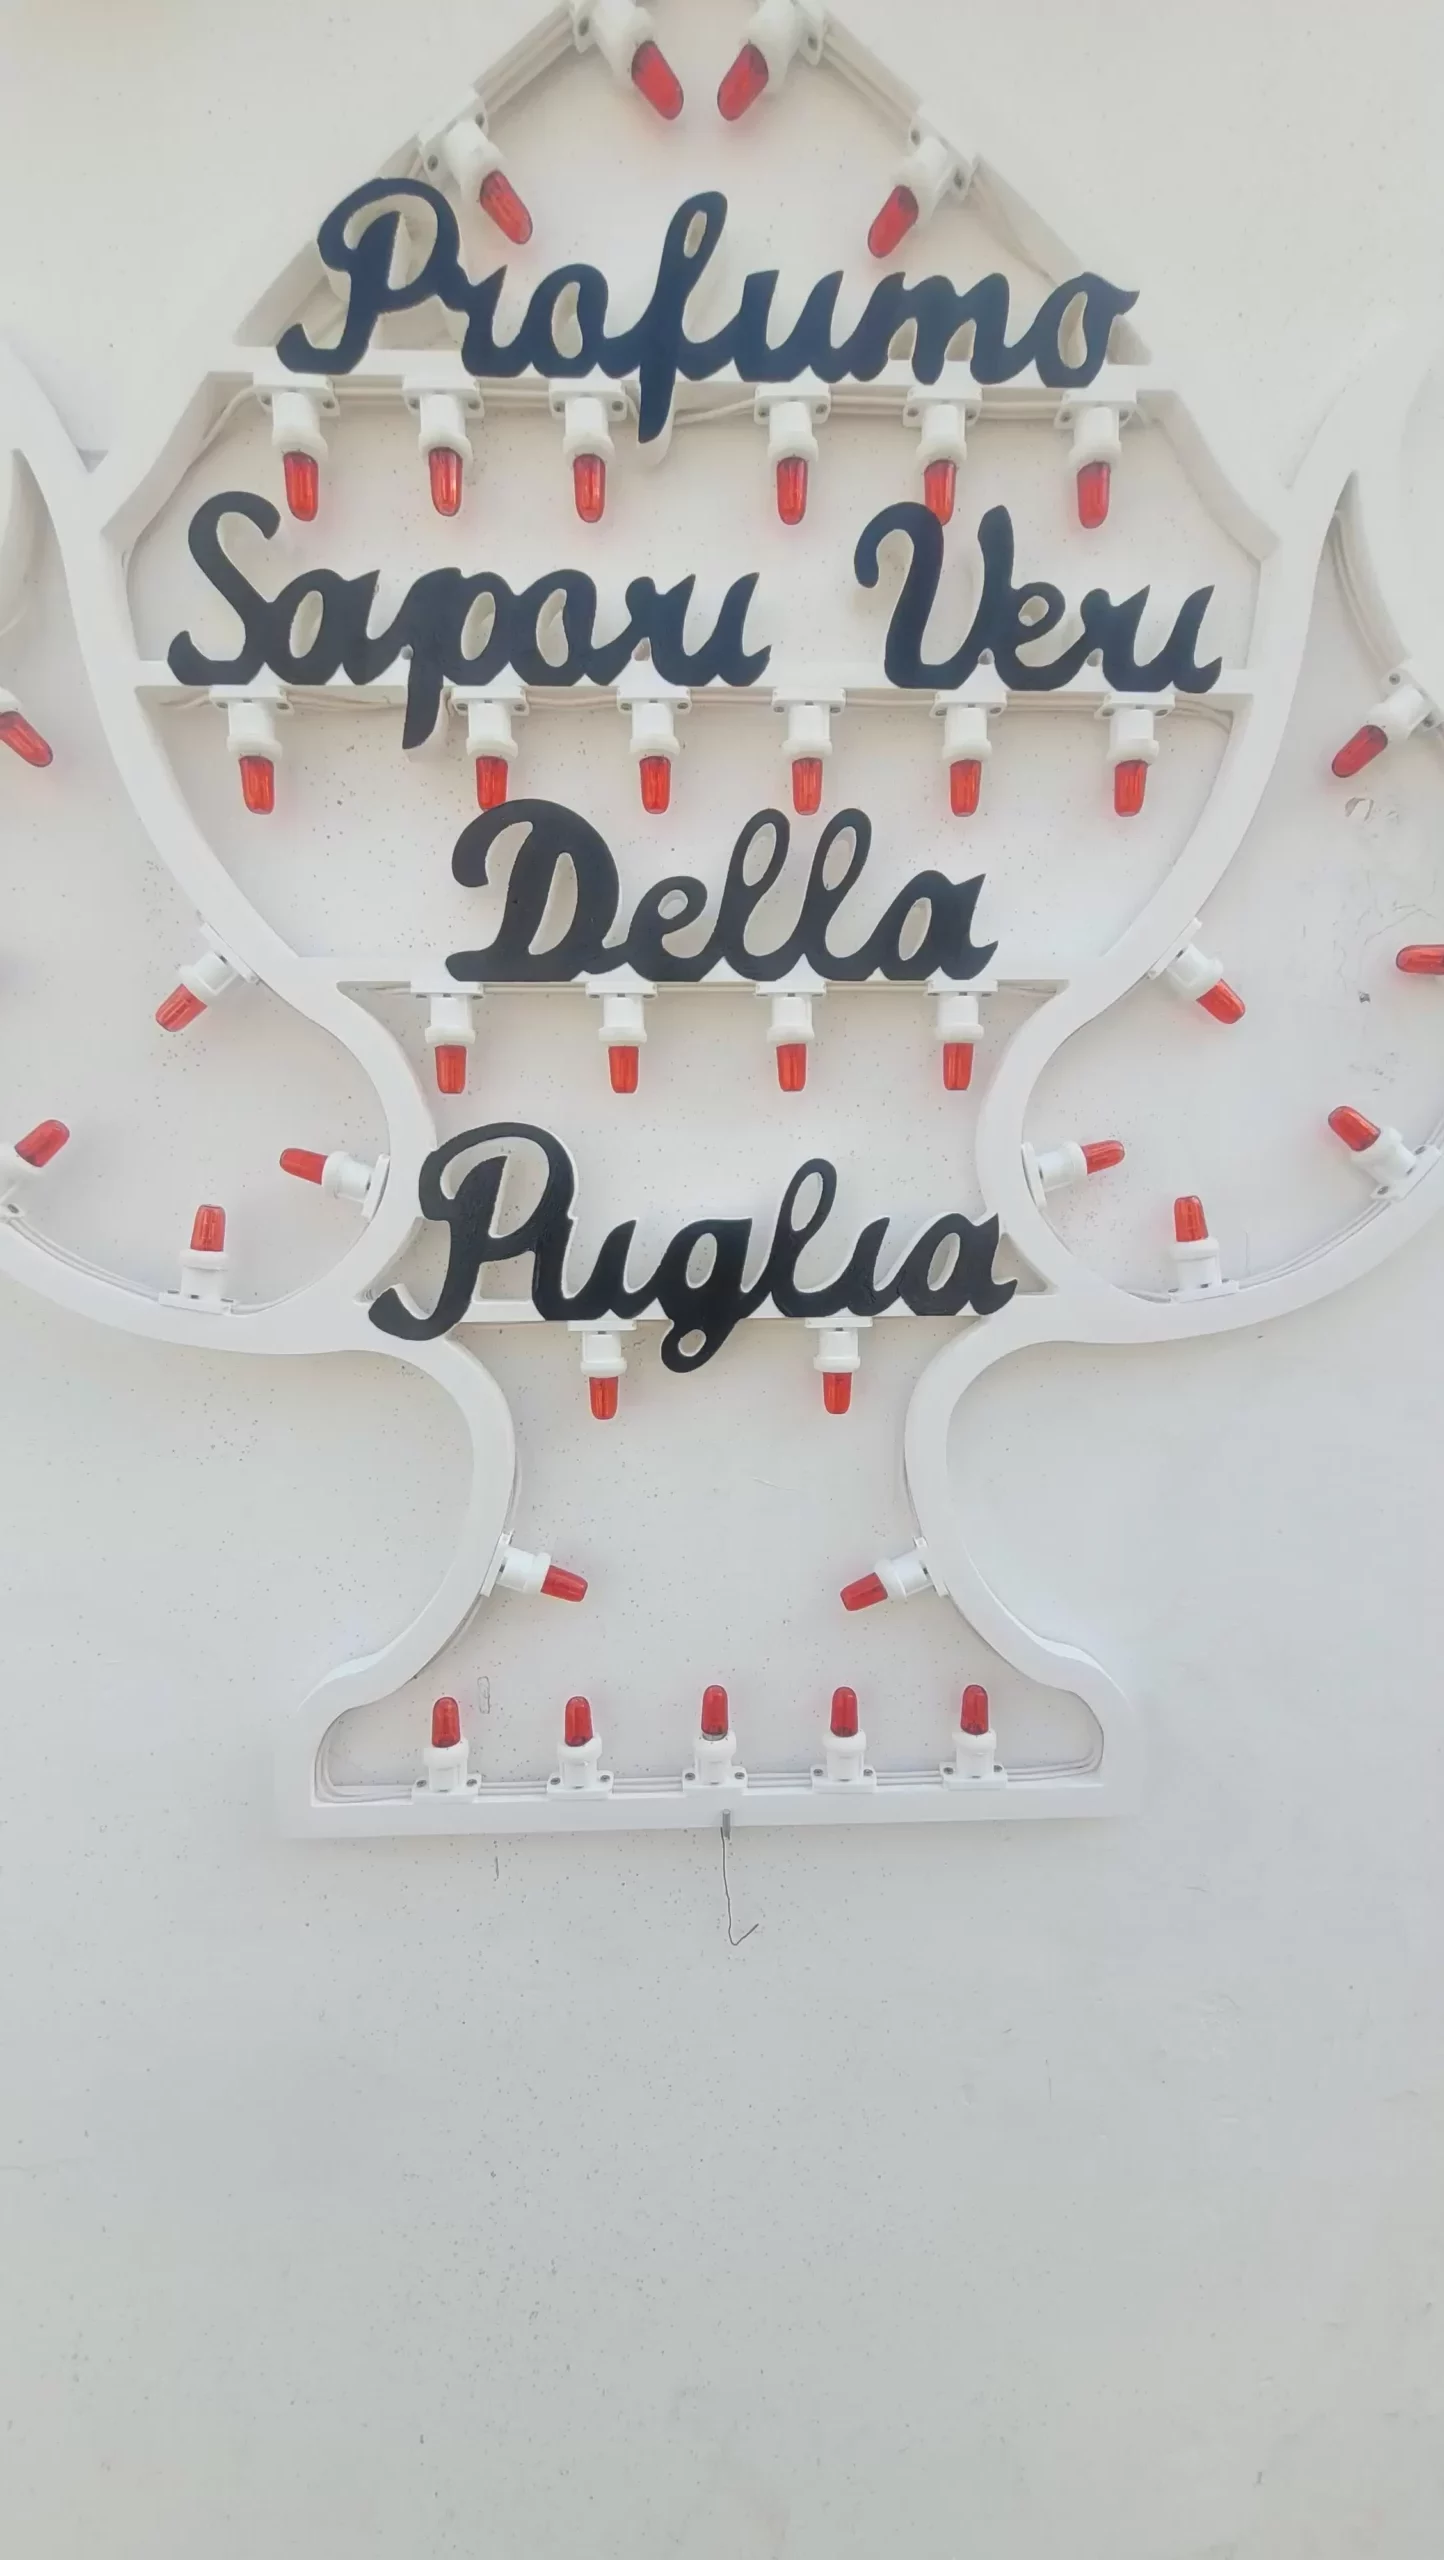 Trips to Puglia